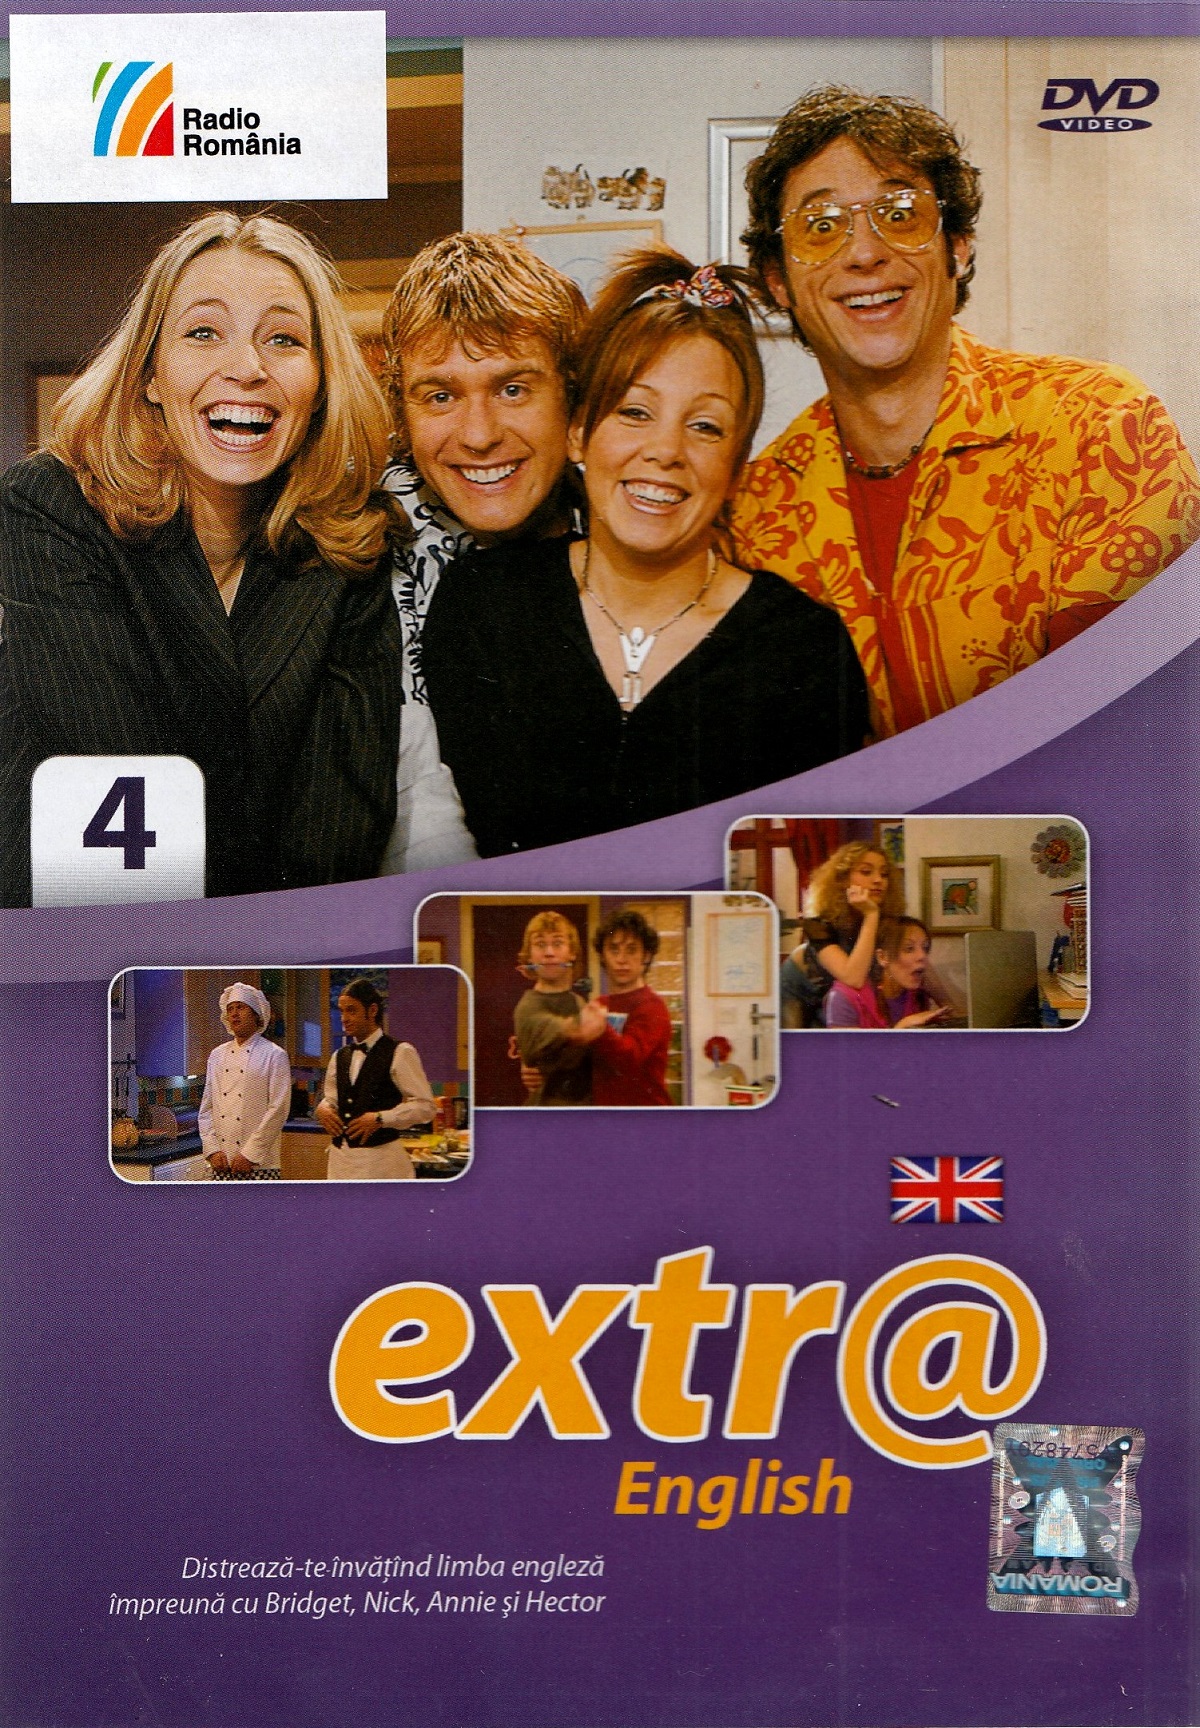 Extra English Nr.4 + DVD - Ken Wilson